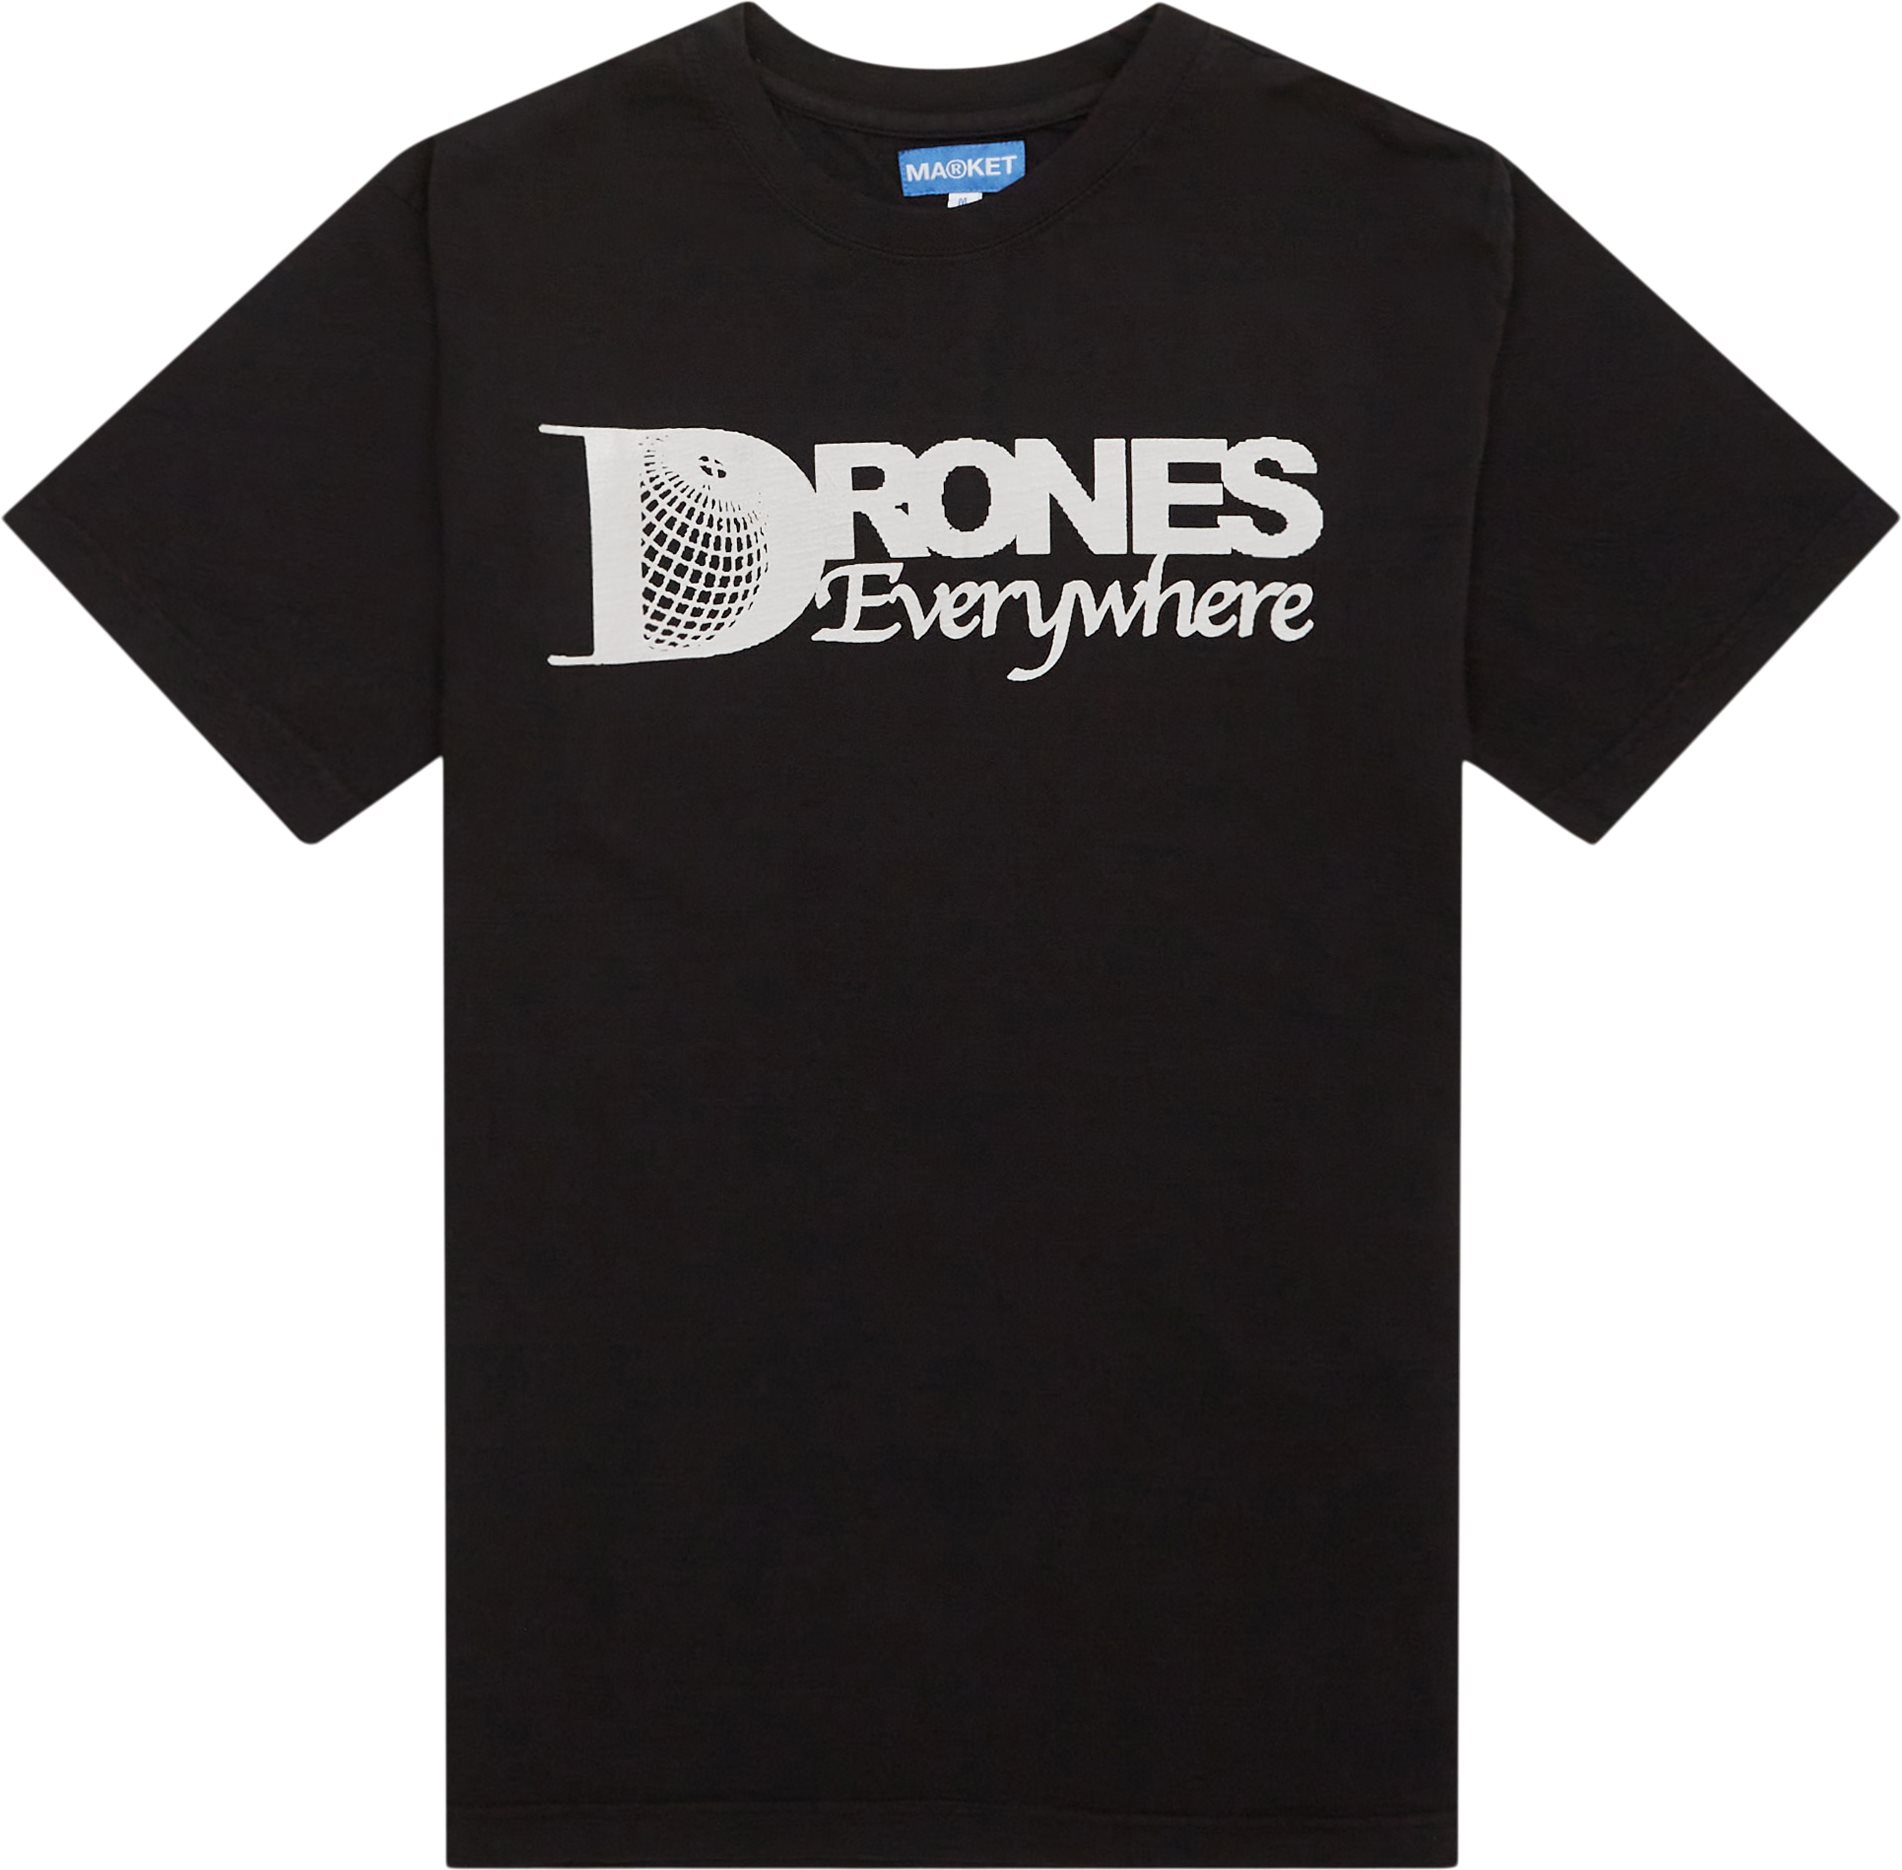 Market T-shirts DRONES EVERYWHERE TEE Black